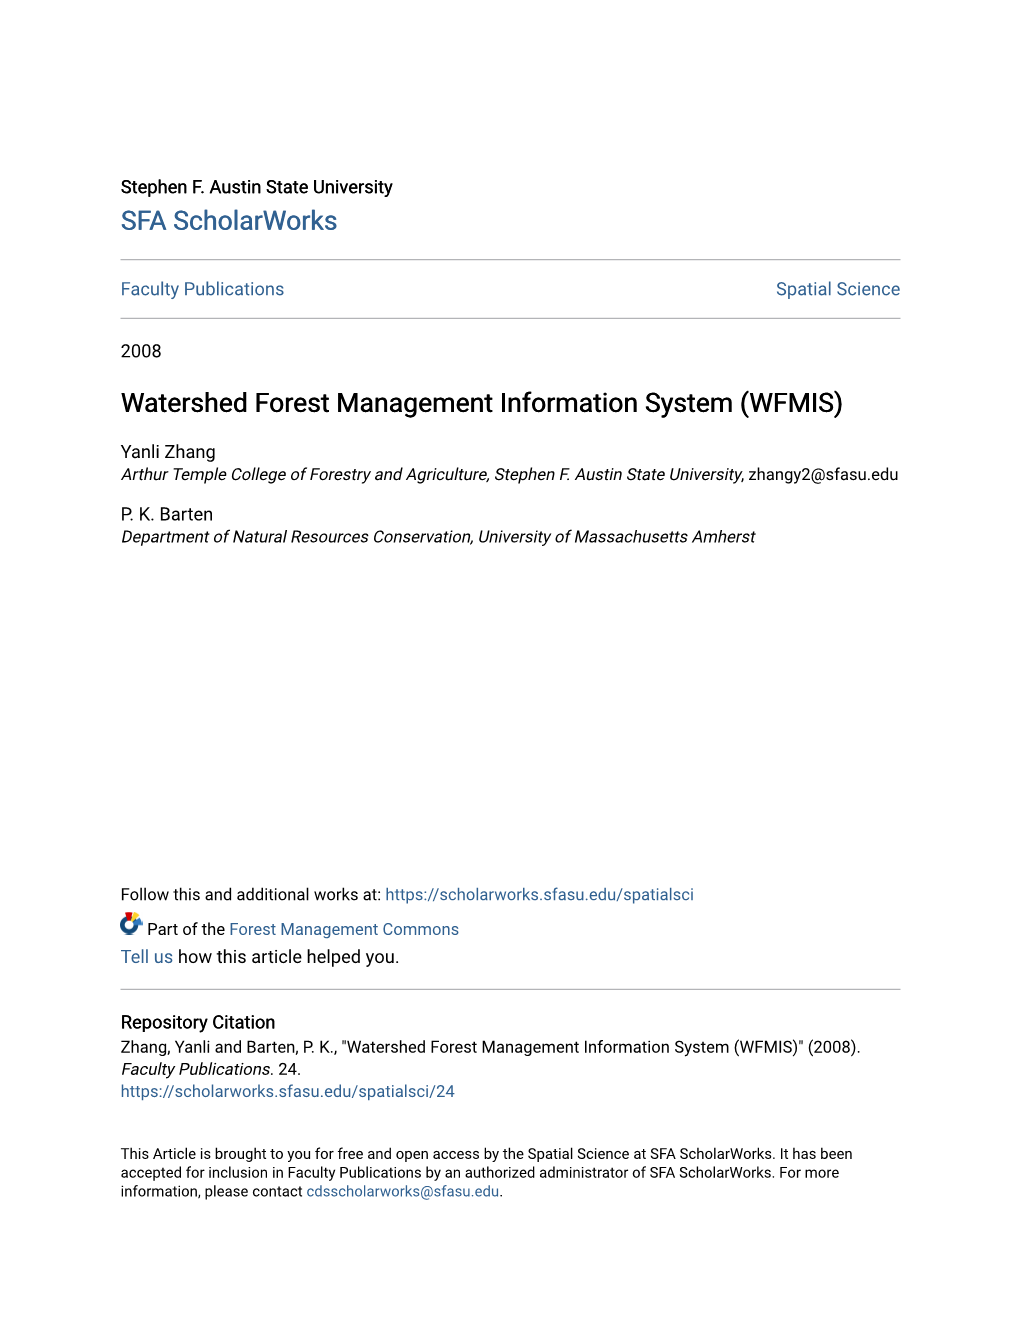 Watershed Forest Management Information System (WFMIS)